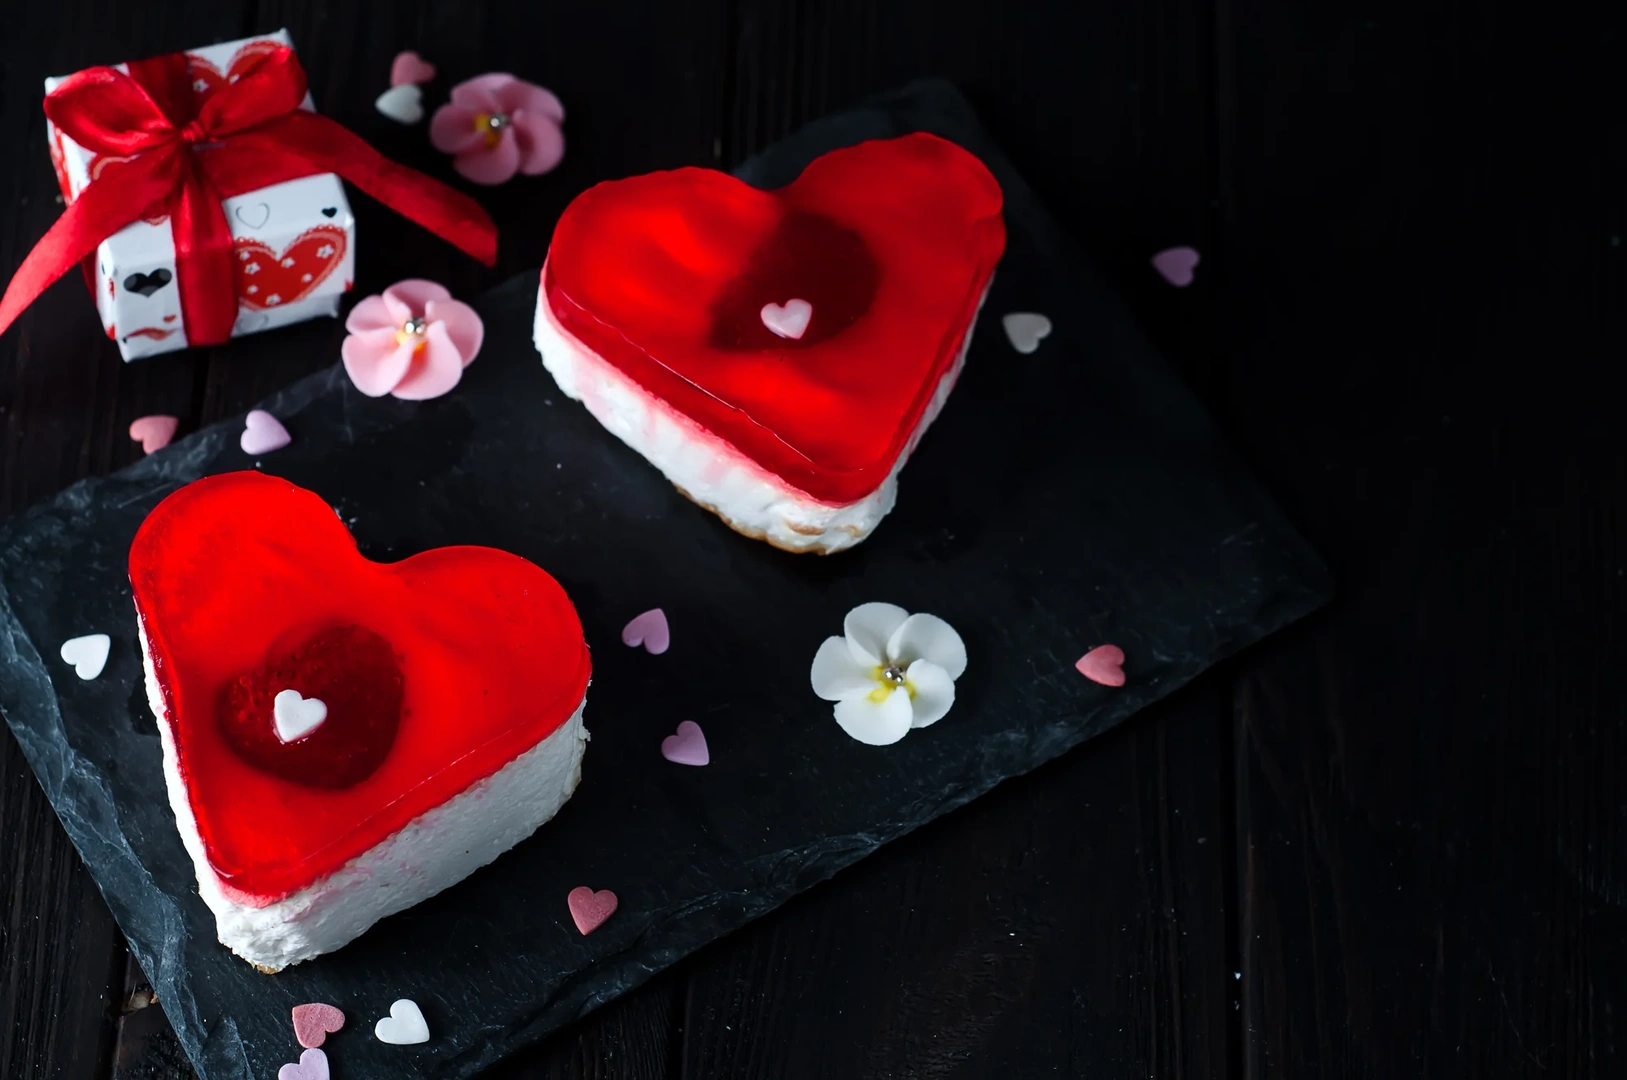 5 Creative Valentine's Day Cake Designs To Impress Your Love